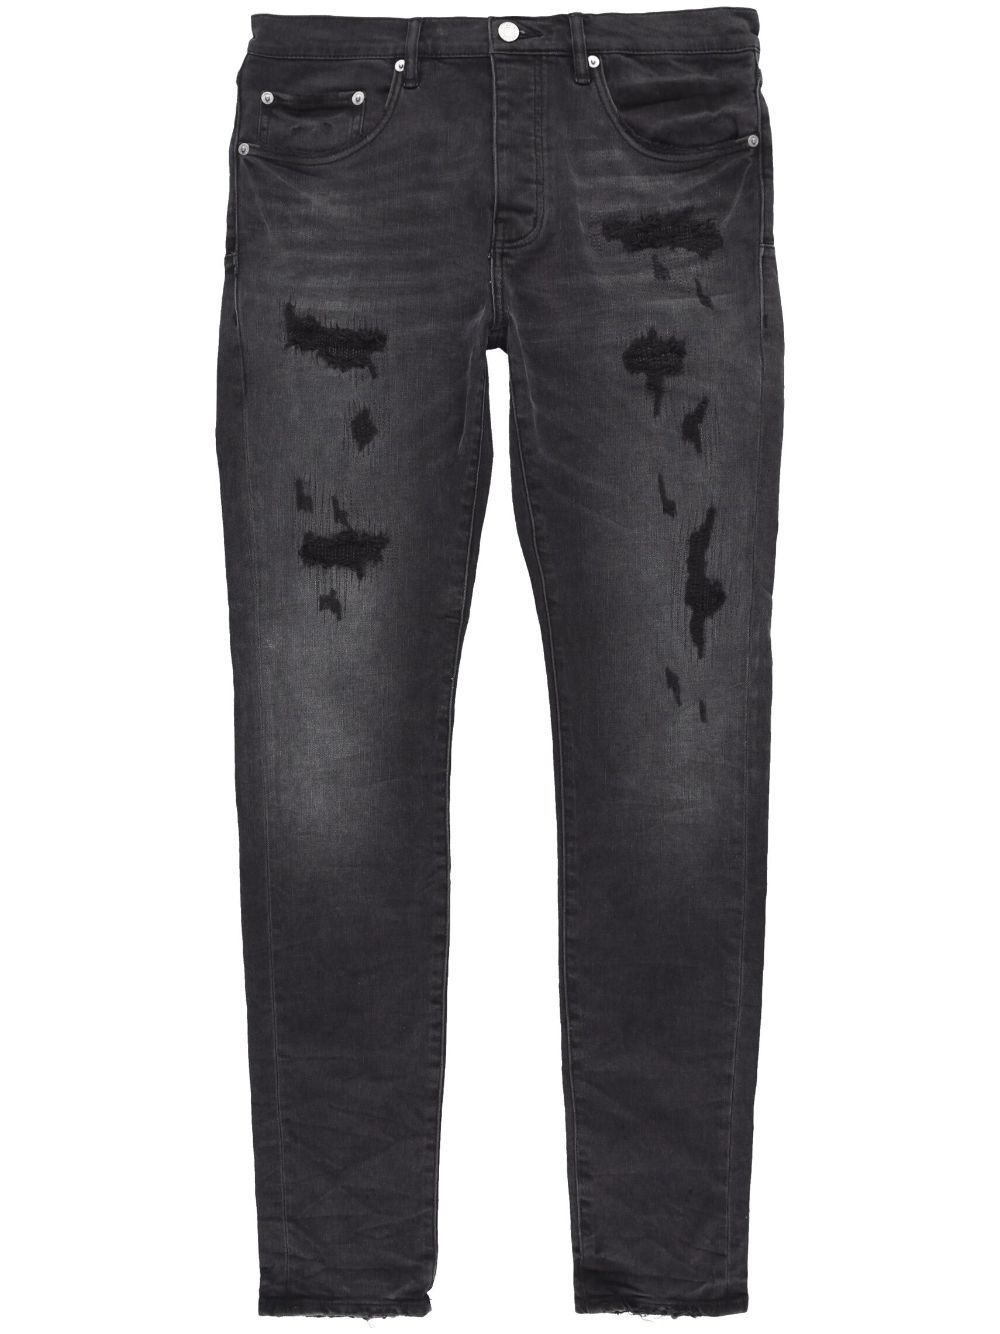 Purple Brand Jeans Mens Size 34 Nwt P0